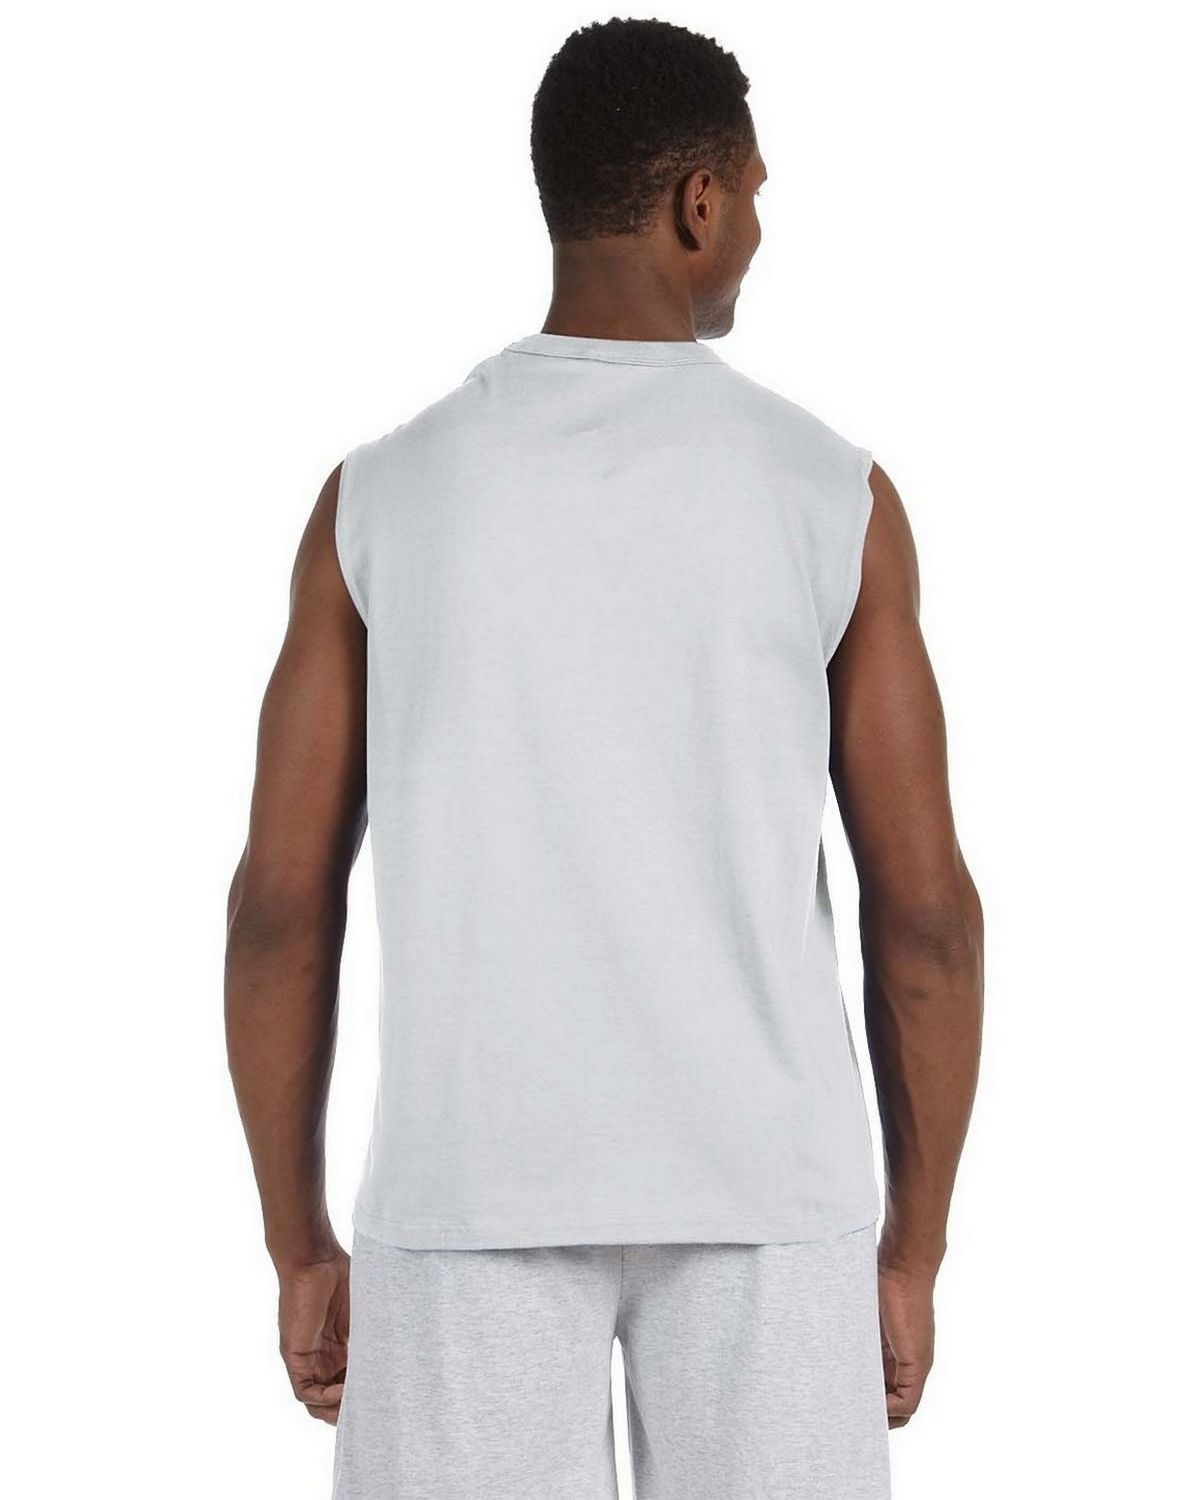 Reviews about Jerzees 49M 5.6 oz HiDENSI-T Cotton Sleeveless T-Shirt